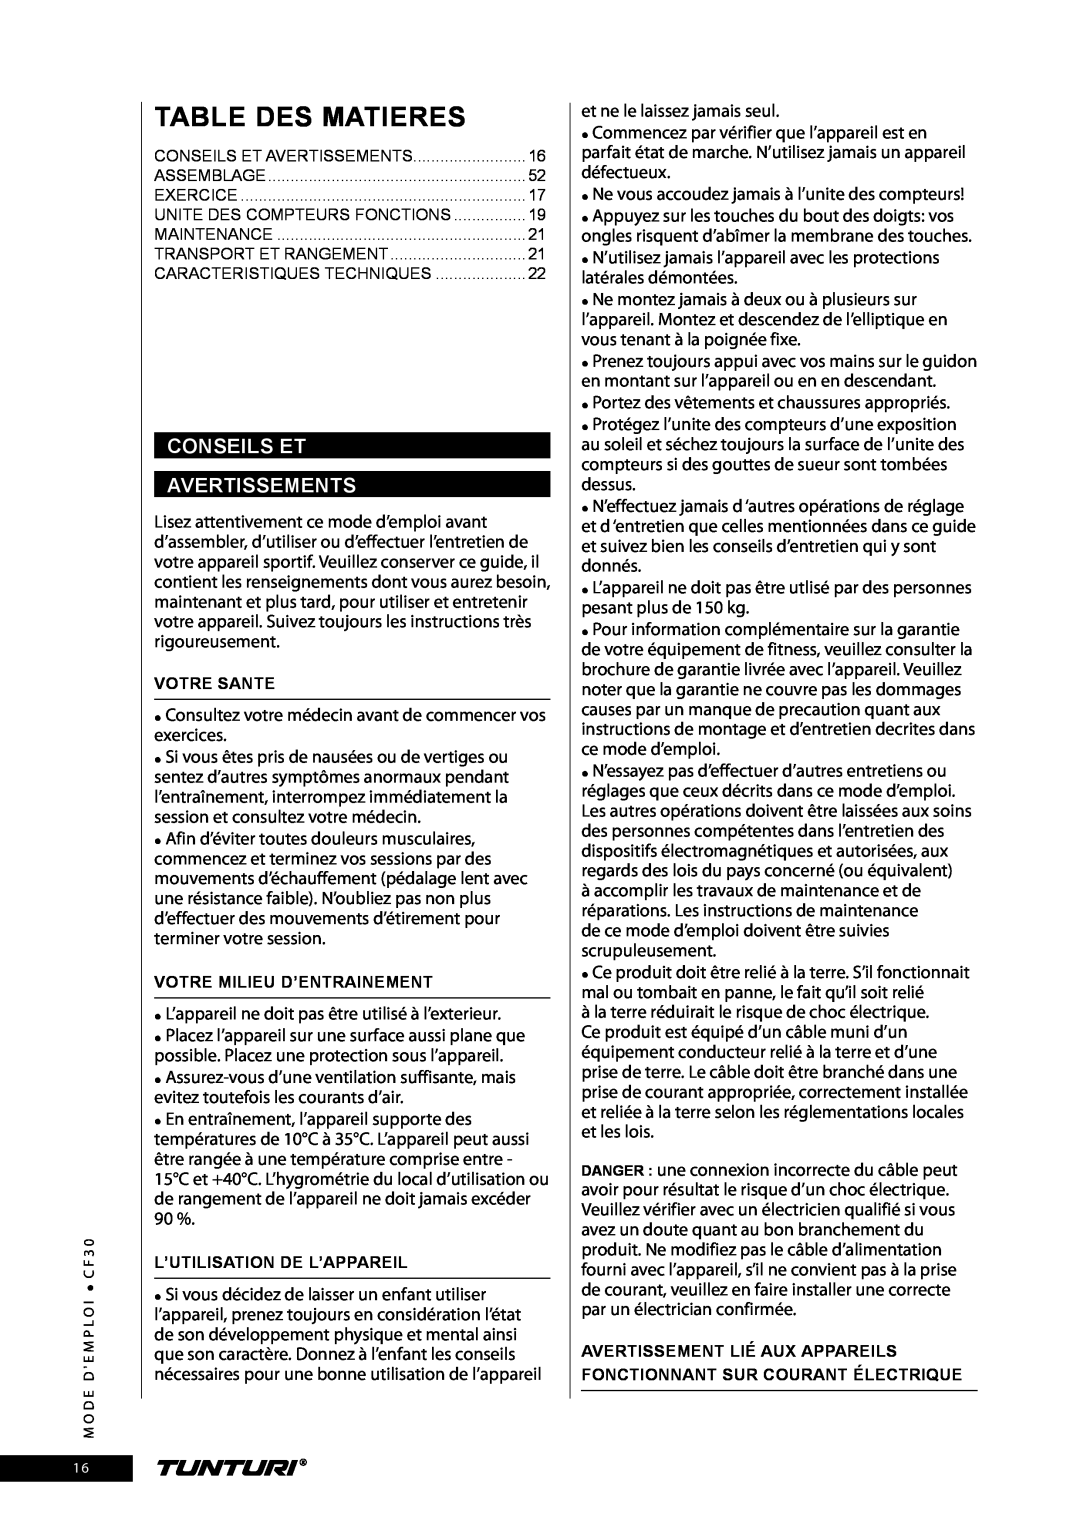 Tunturi CF30 owner manual Table des Matieres, Conseils Et Avertissements 